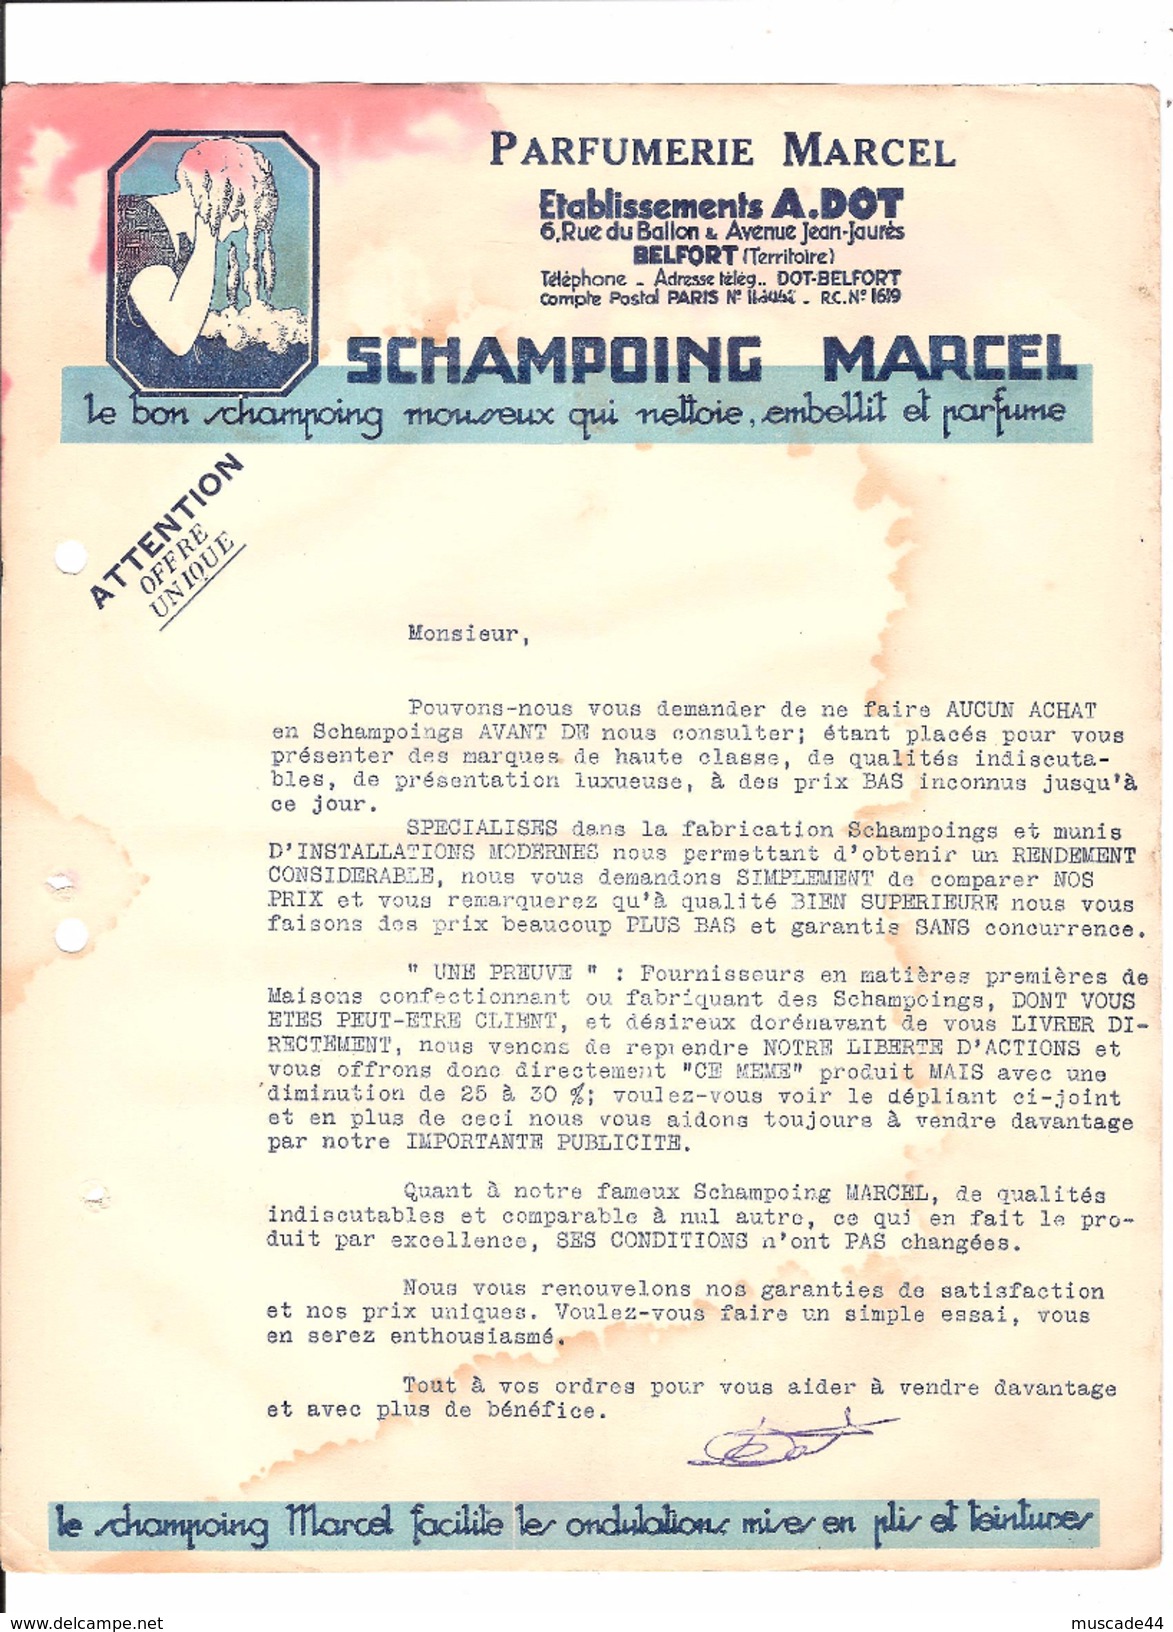 SHAMPOING MARCEL - A. DOT - BELFORT - 1900 – 1949